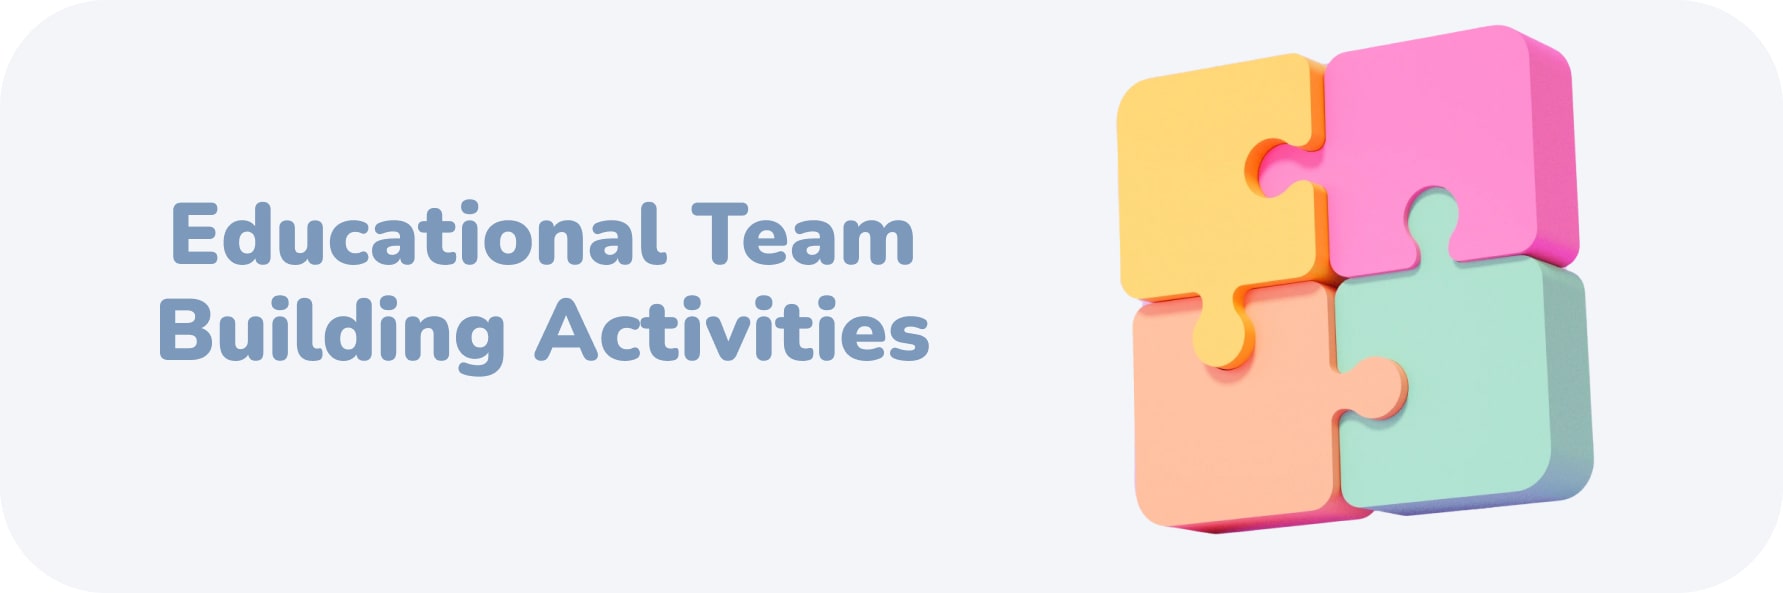 Educational Team Building Activities